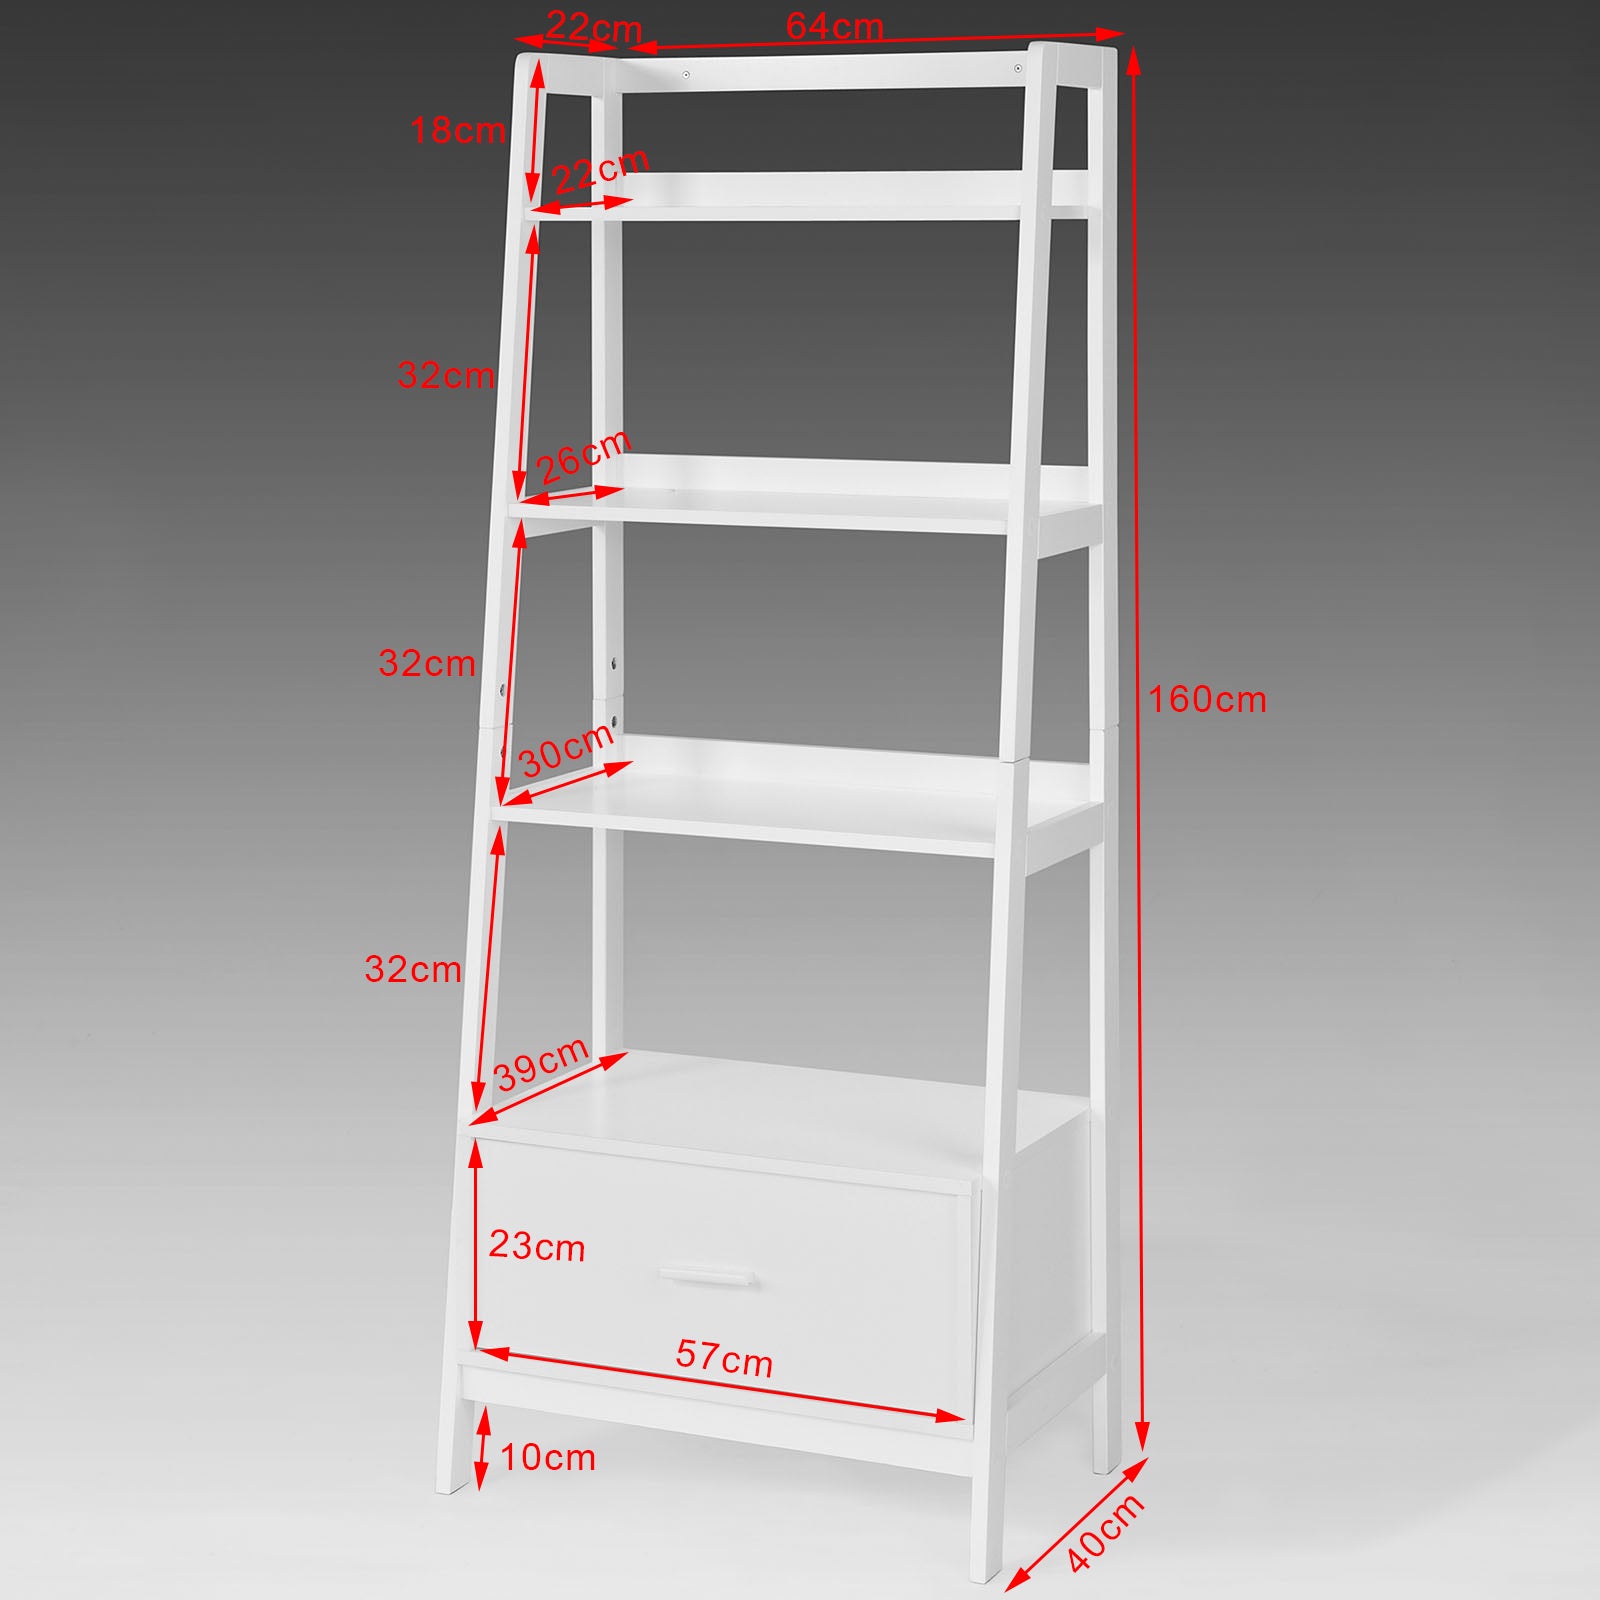 SoBuy White Storage Display Shelf Bookcase with Drawer and Shelves,FRG116-W